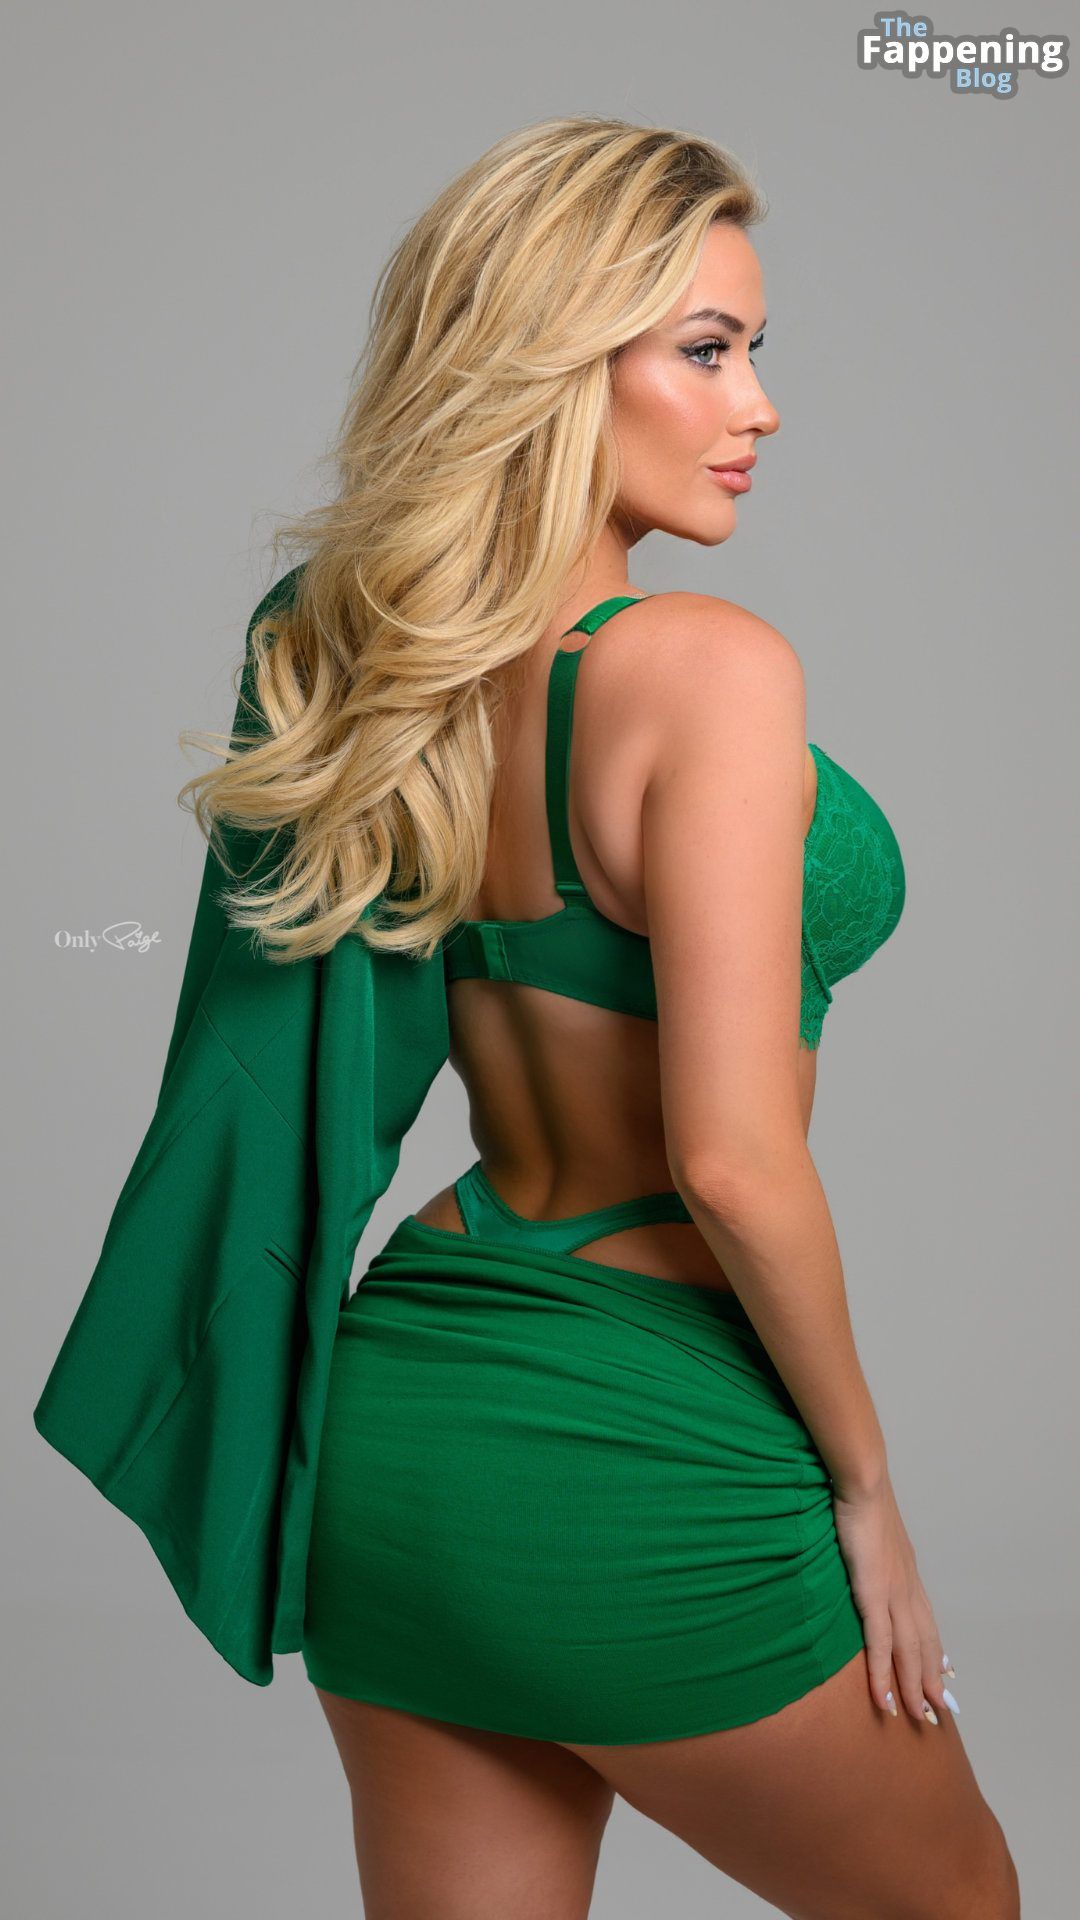 Paige-Spiranac-Green-Underwear-Spectacular-Breasts-10-thefappeningblog.com_.jpg